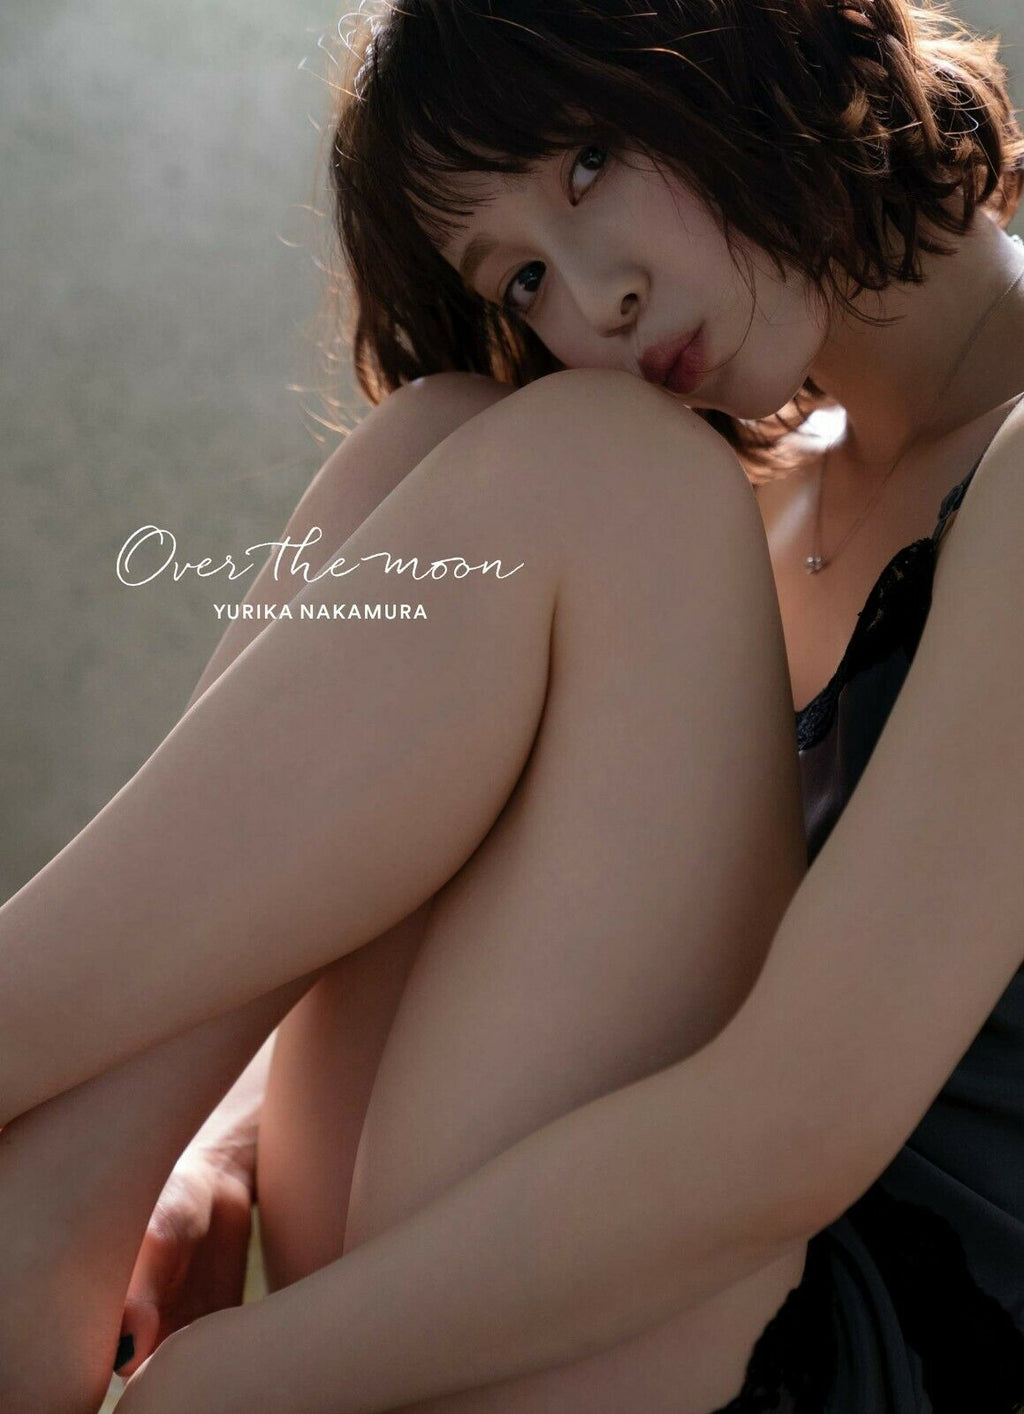 NEW Yurika Nakamura 1st Photo Book 'Over the moon' | Japanese Actress JAPAN